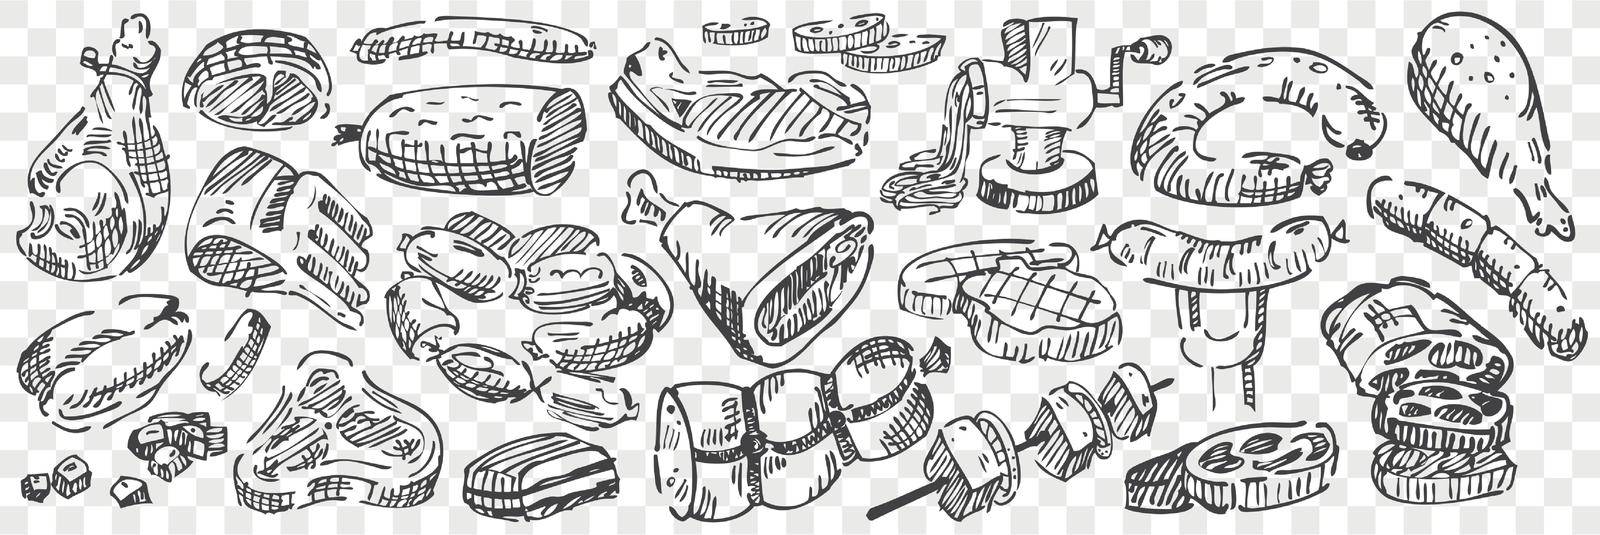 Hand drawn meat doodle set. Collection of beaf veal mutton lamb chicken sausages frankfurter tenderloin sirloin fillet loin on transparent background. Cattle cutting parts food illustration.